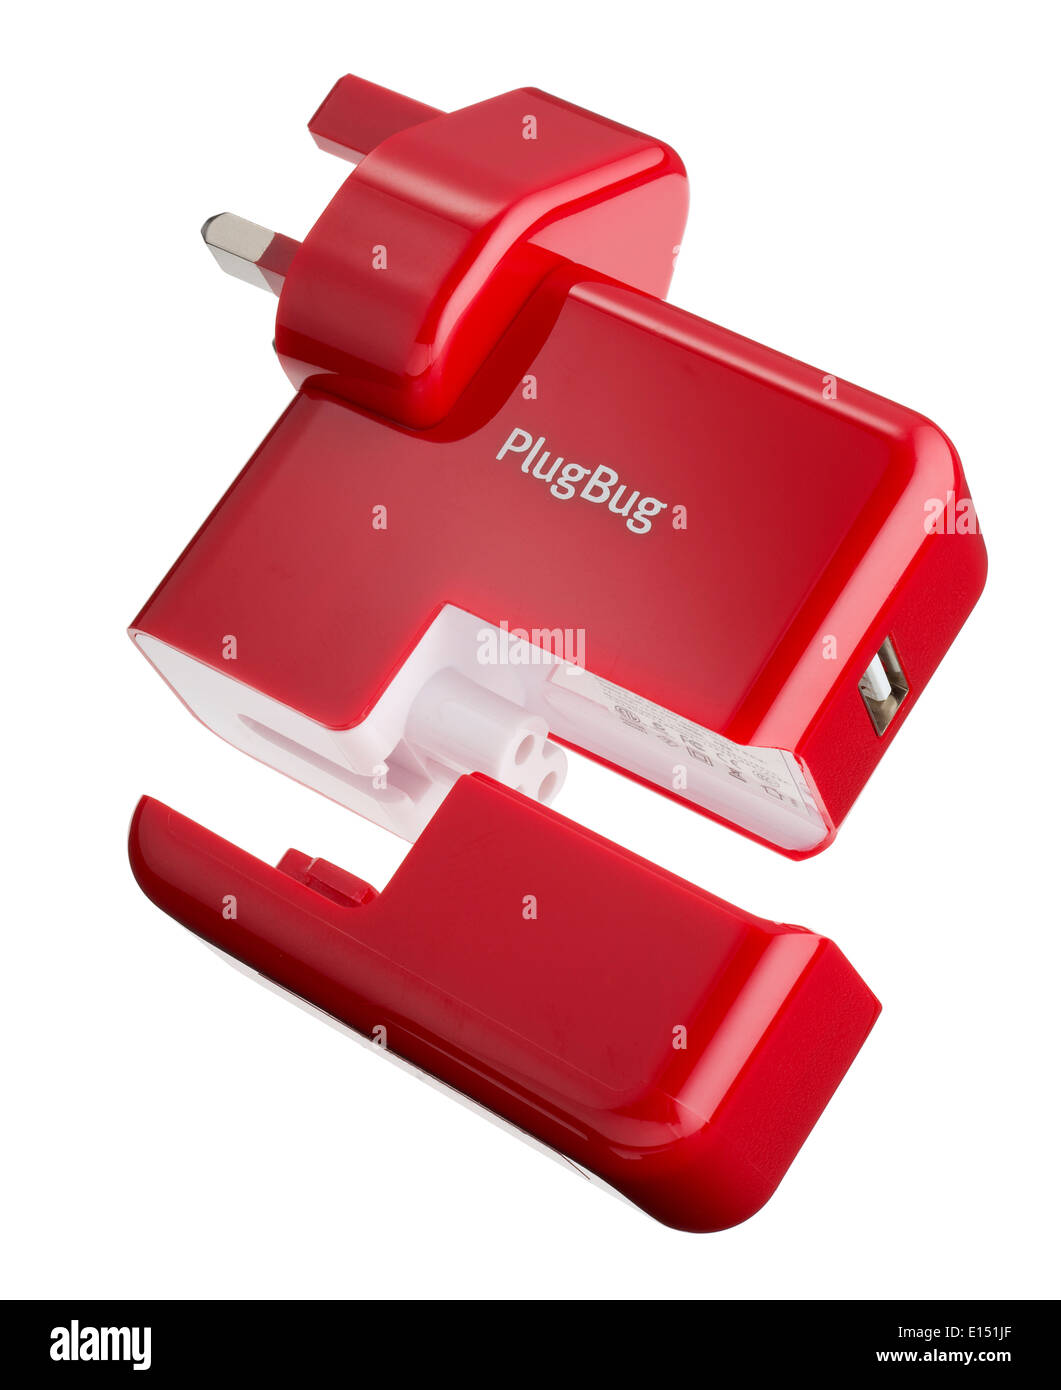 PlugBug ipad and MacBook wall charging device Stock Photo